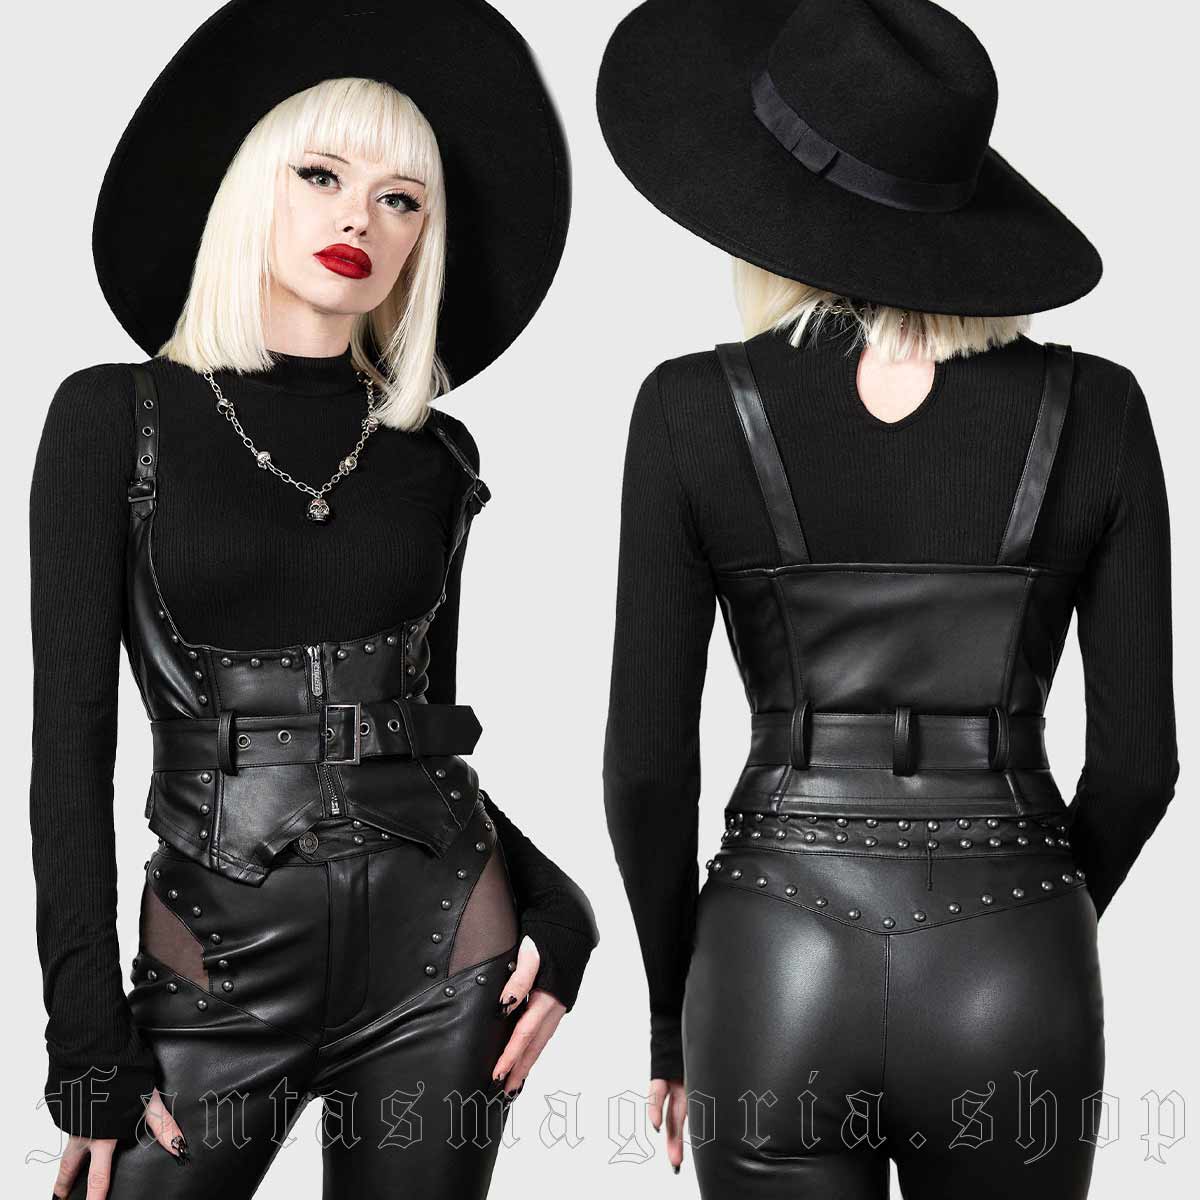 Black Leather Underbust Corset Dress